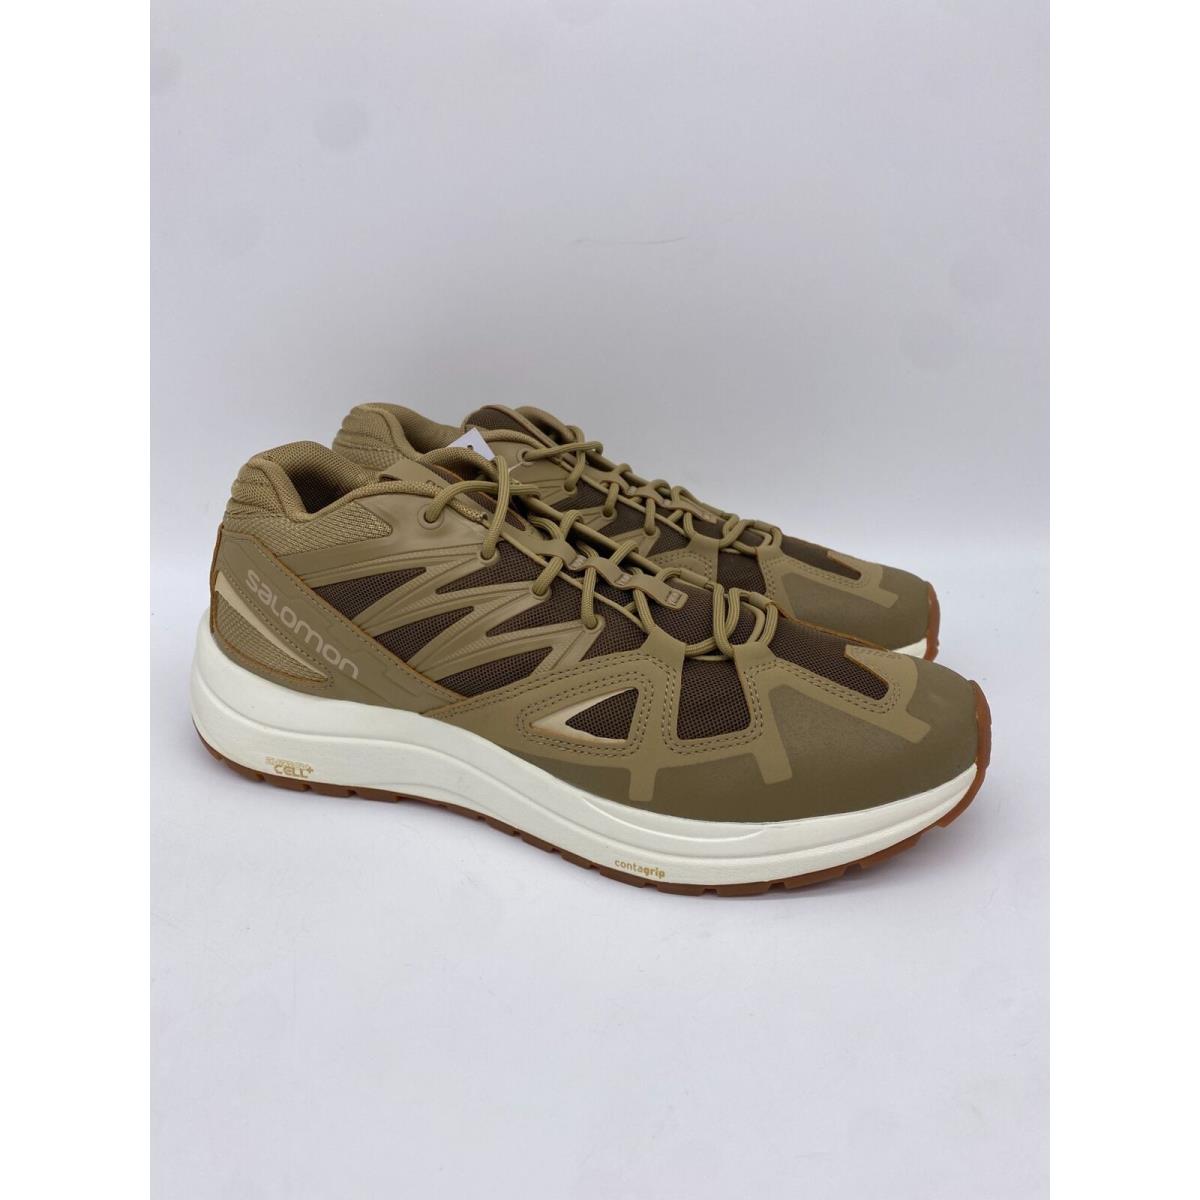 Salomon shoes Hiking - kelp/desert palm/vanilla ice 6